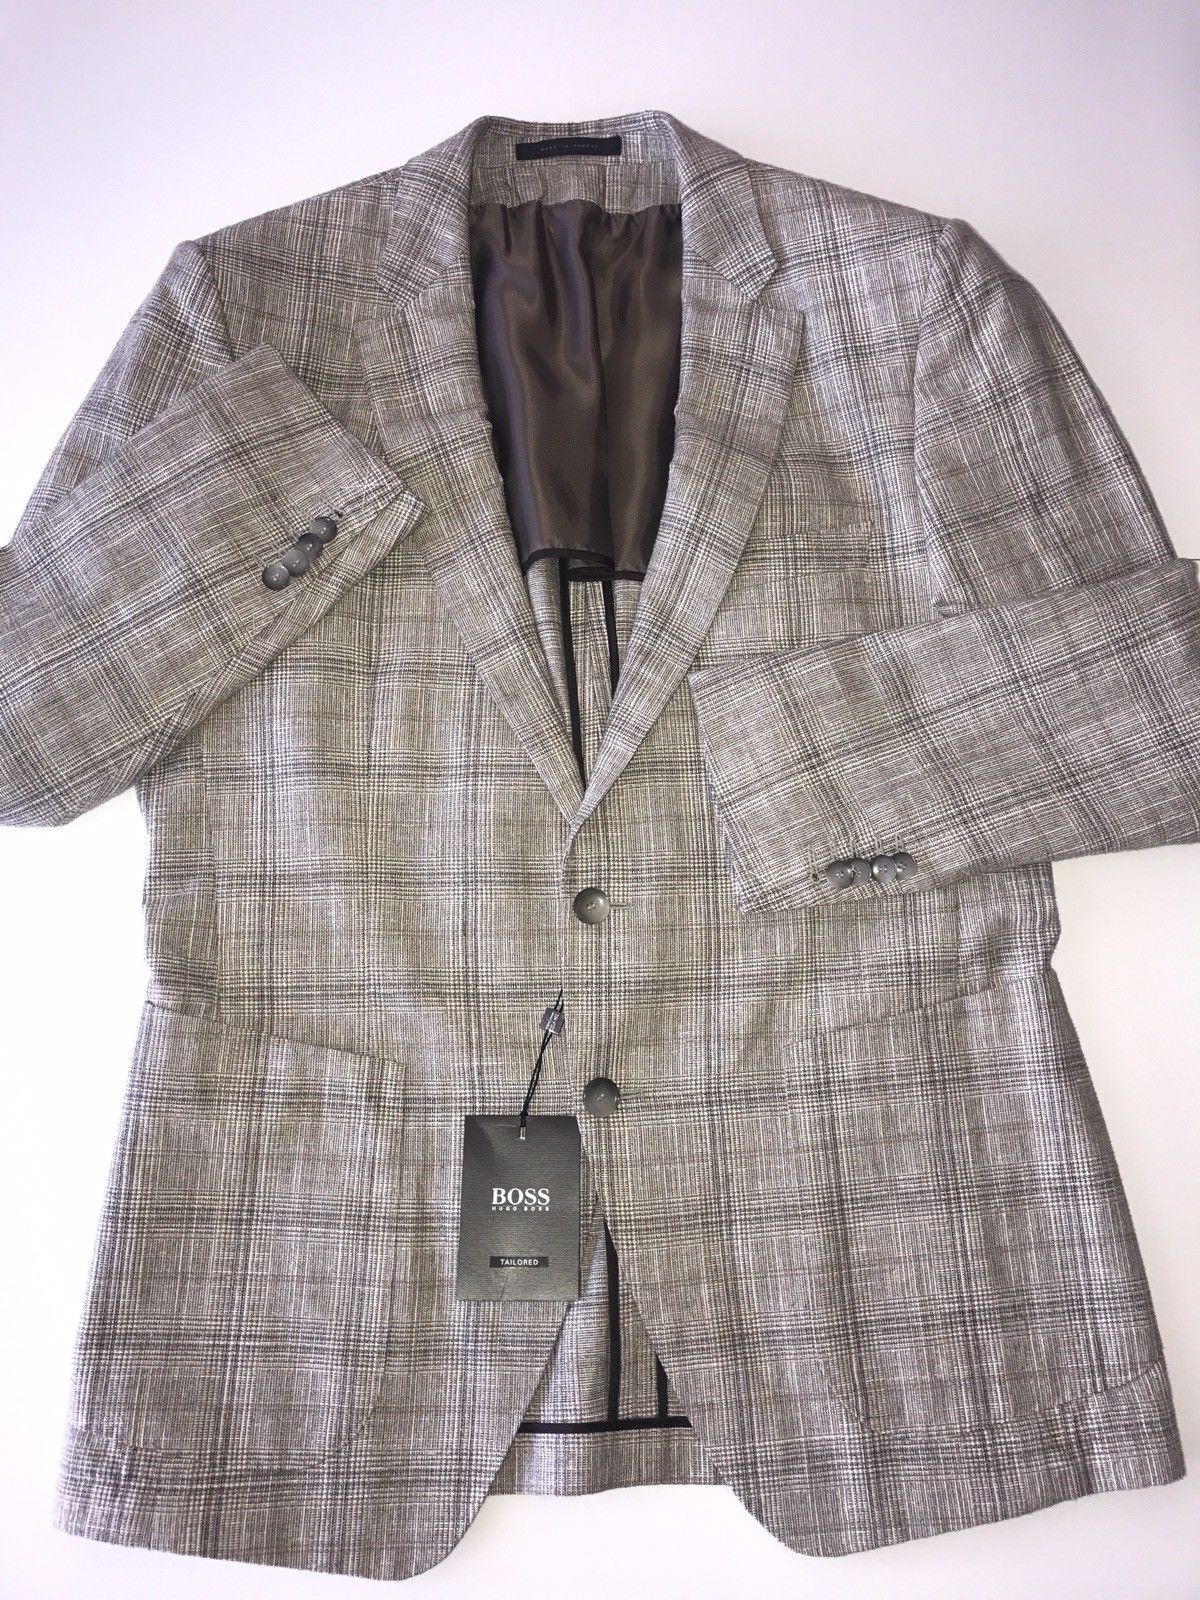 NWT $1295 Boss Hugo Boss T-Rakes Tailored Beige Jacket Blazer 44R US (54R Eu)